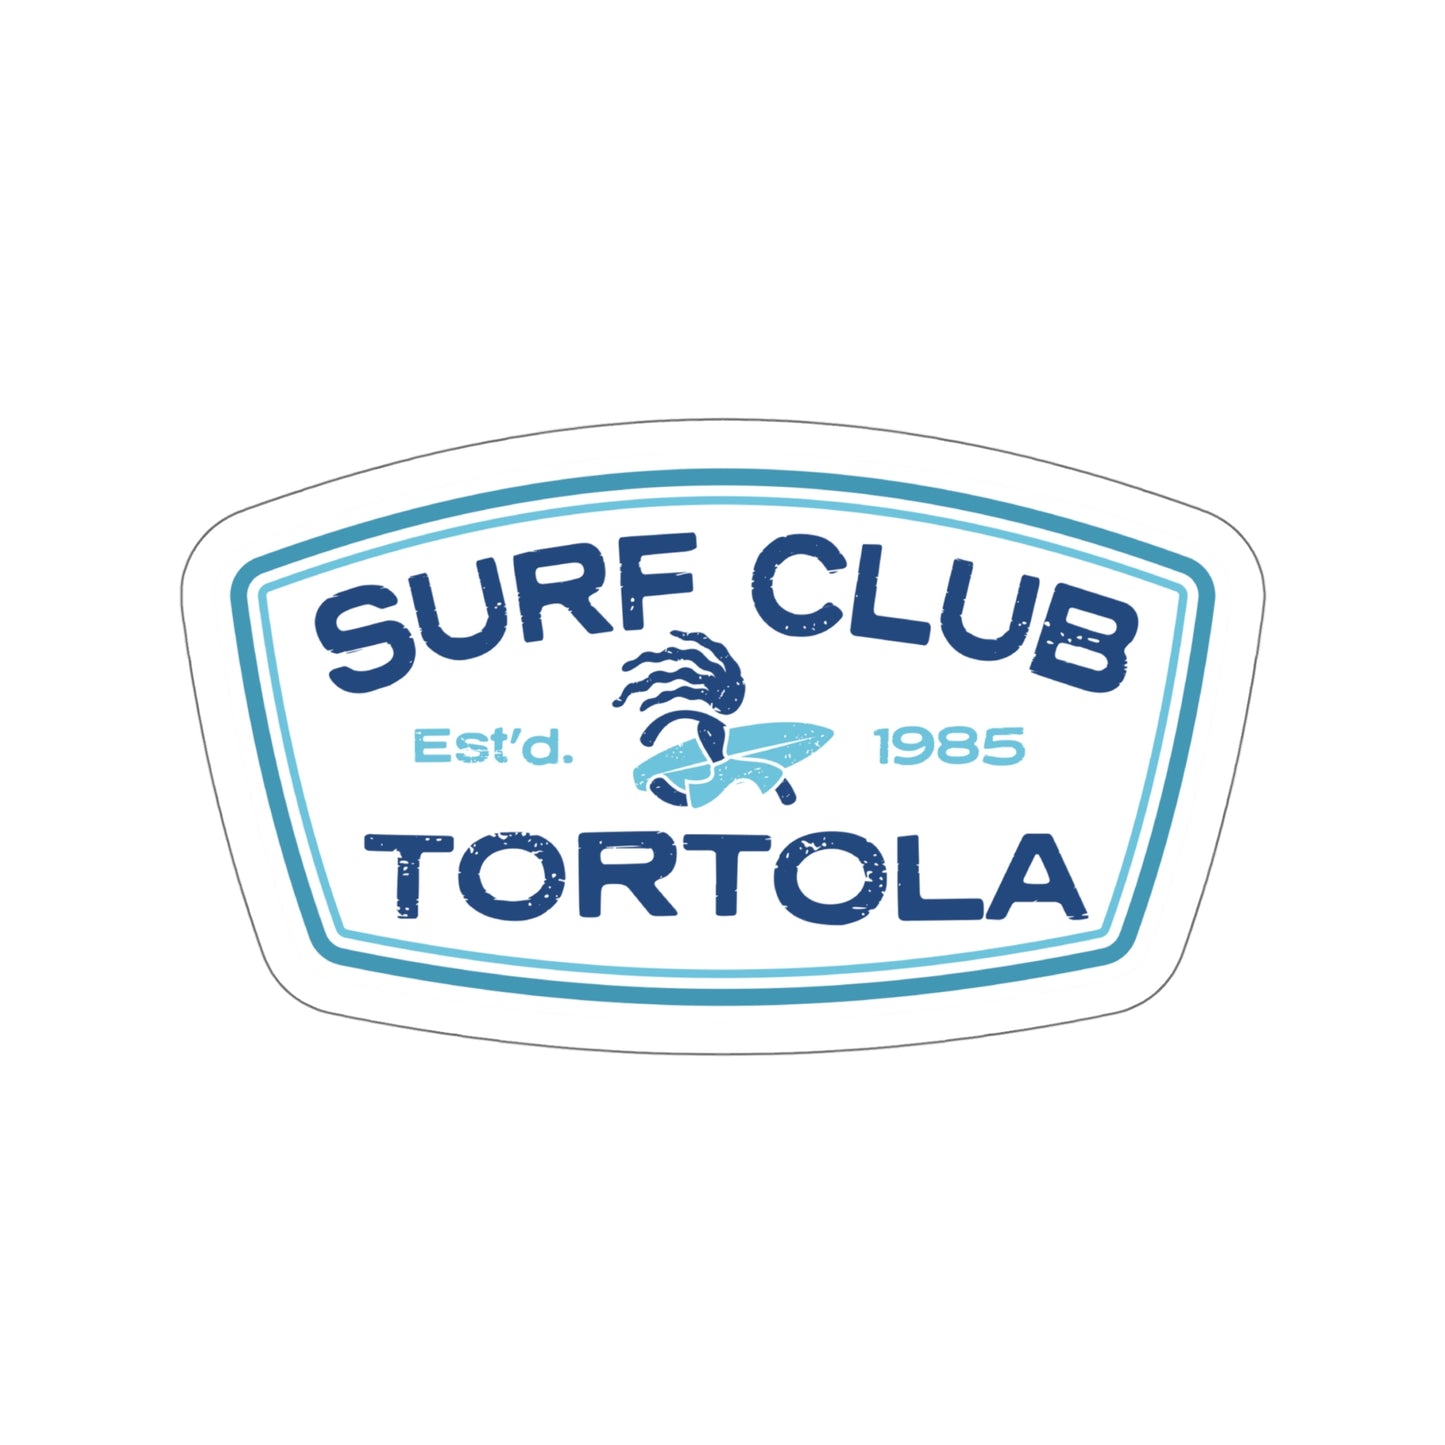 "Surf Club Tortola" (Tonal Blue) Die-Cut Sticker